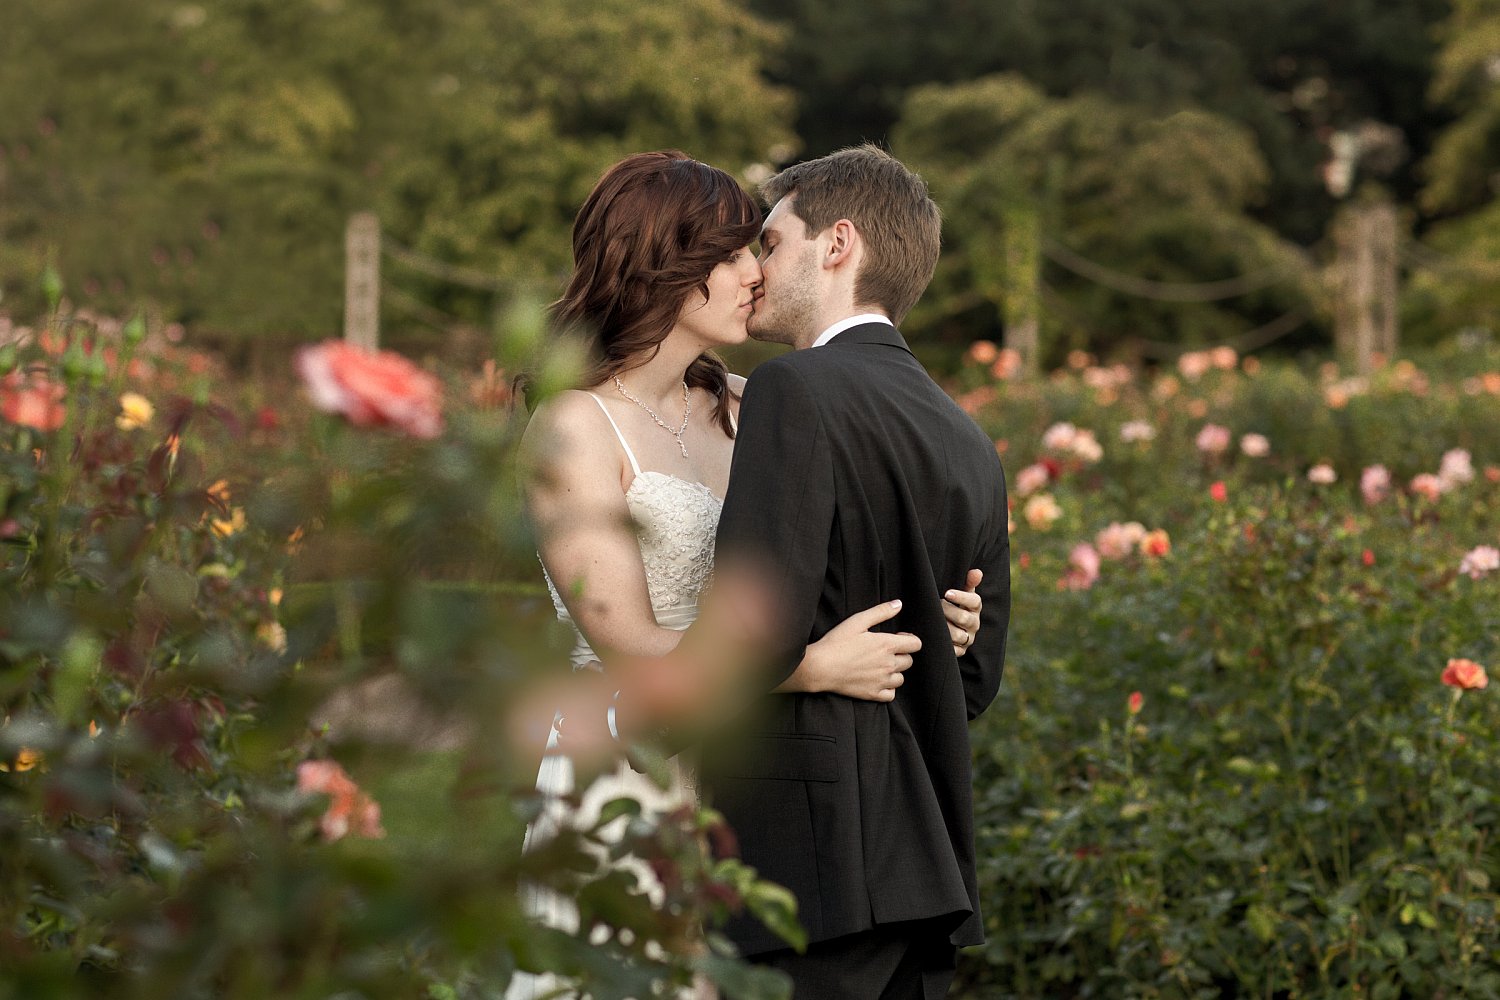 lovers-embrace-rose-garden-regents-park-london-mat-smith-photography_.jpg